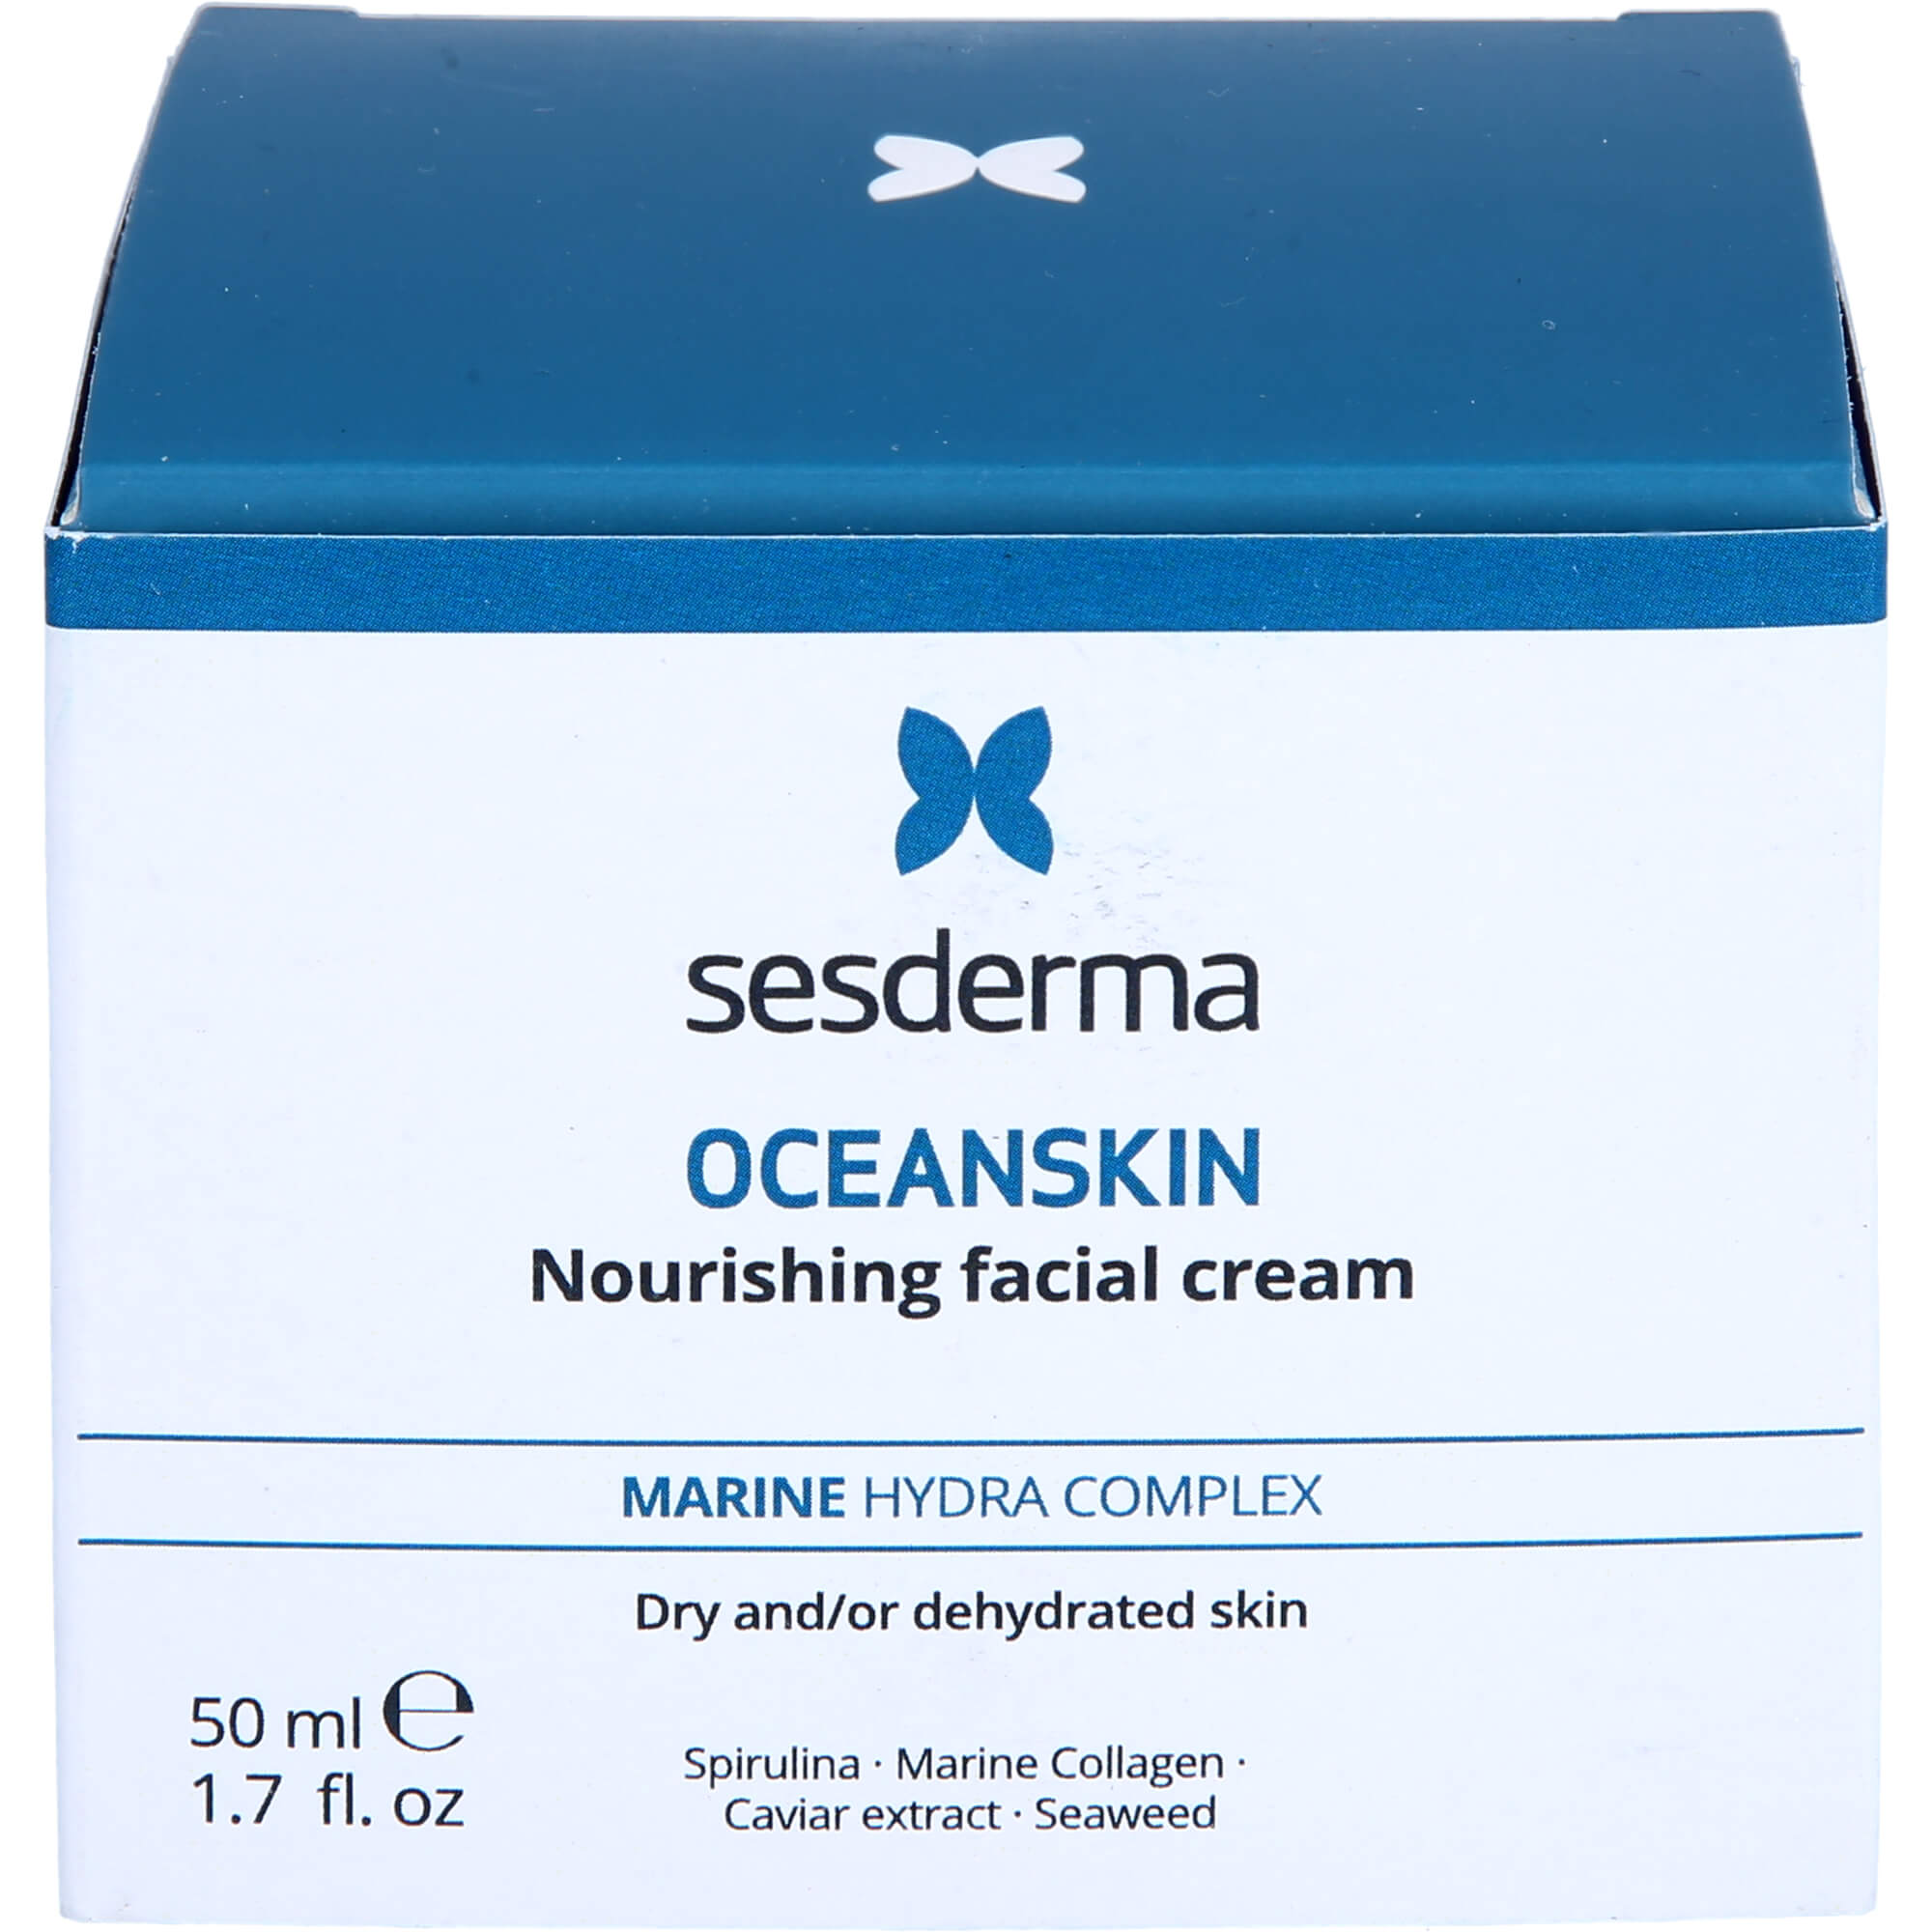 OCEANSKIN Nourishing facial Cream